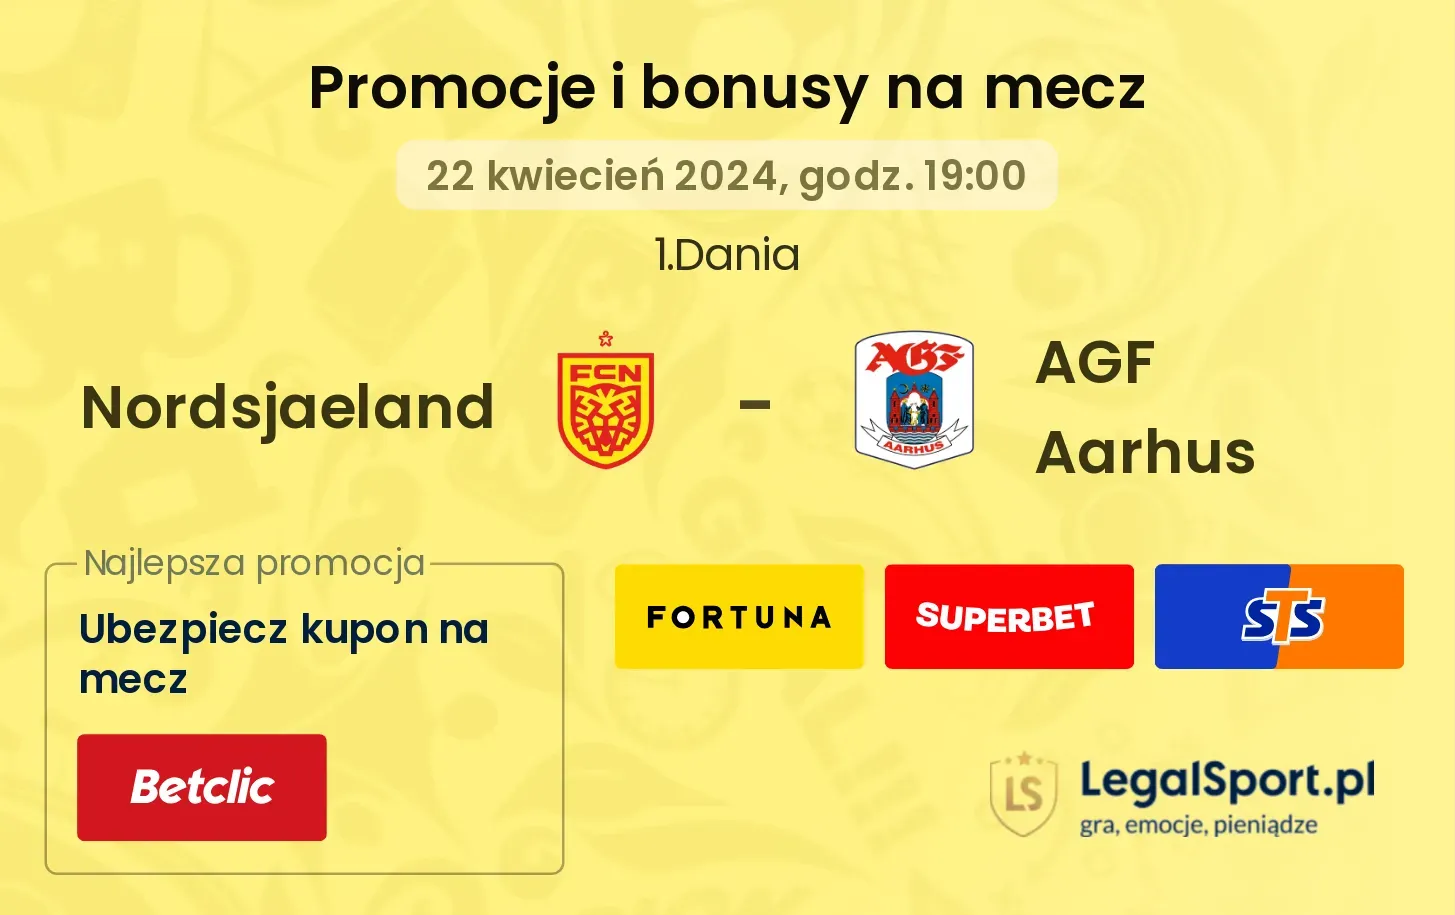 Nordsjaeland - AGF Aarhus promocje bonusy na mecz